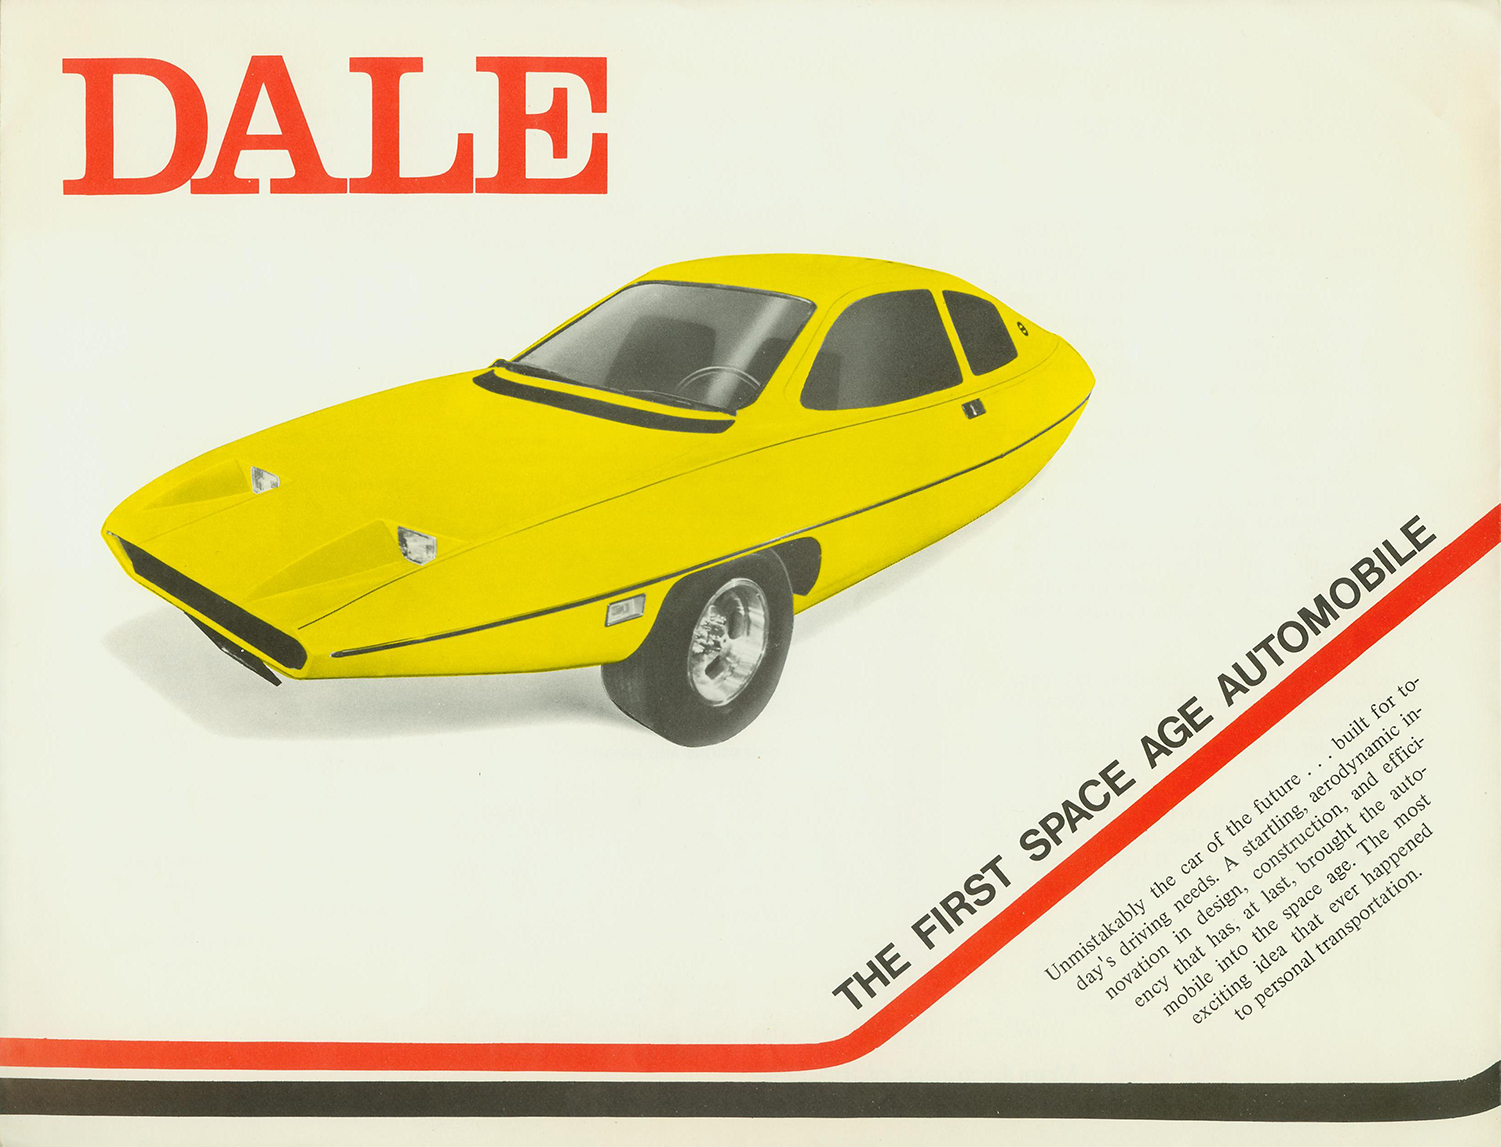 The Dale car brochure